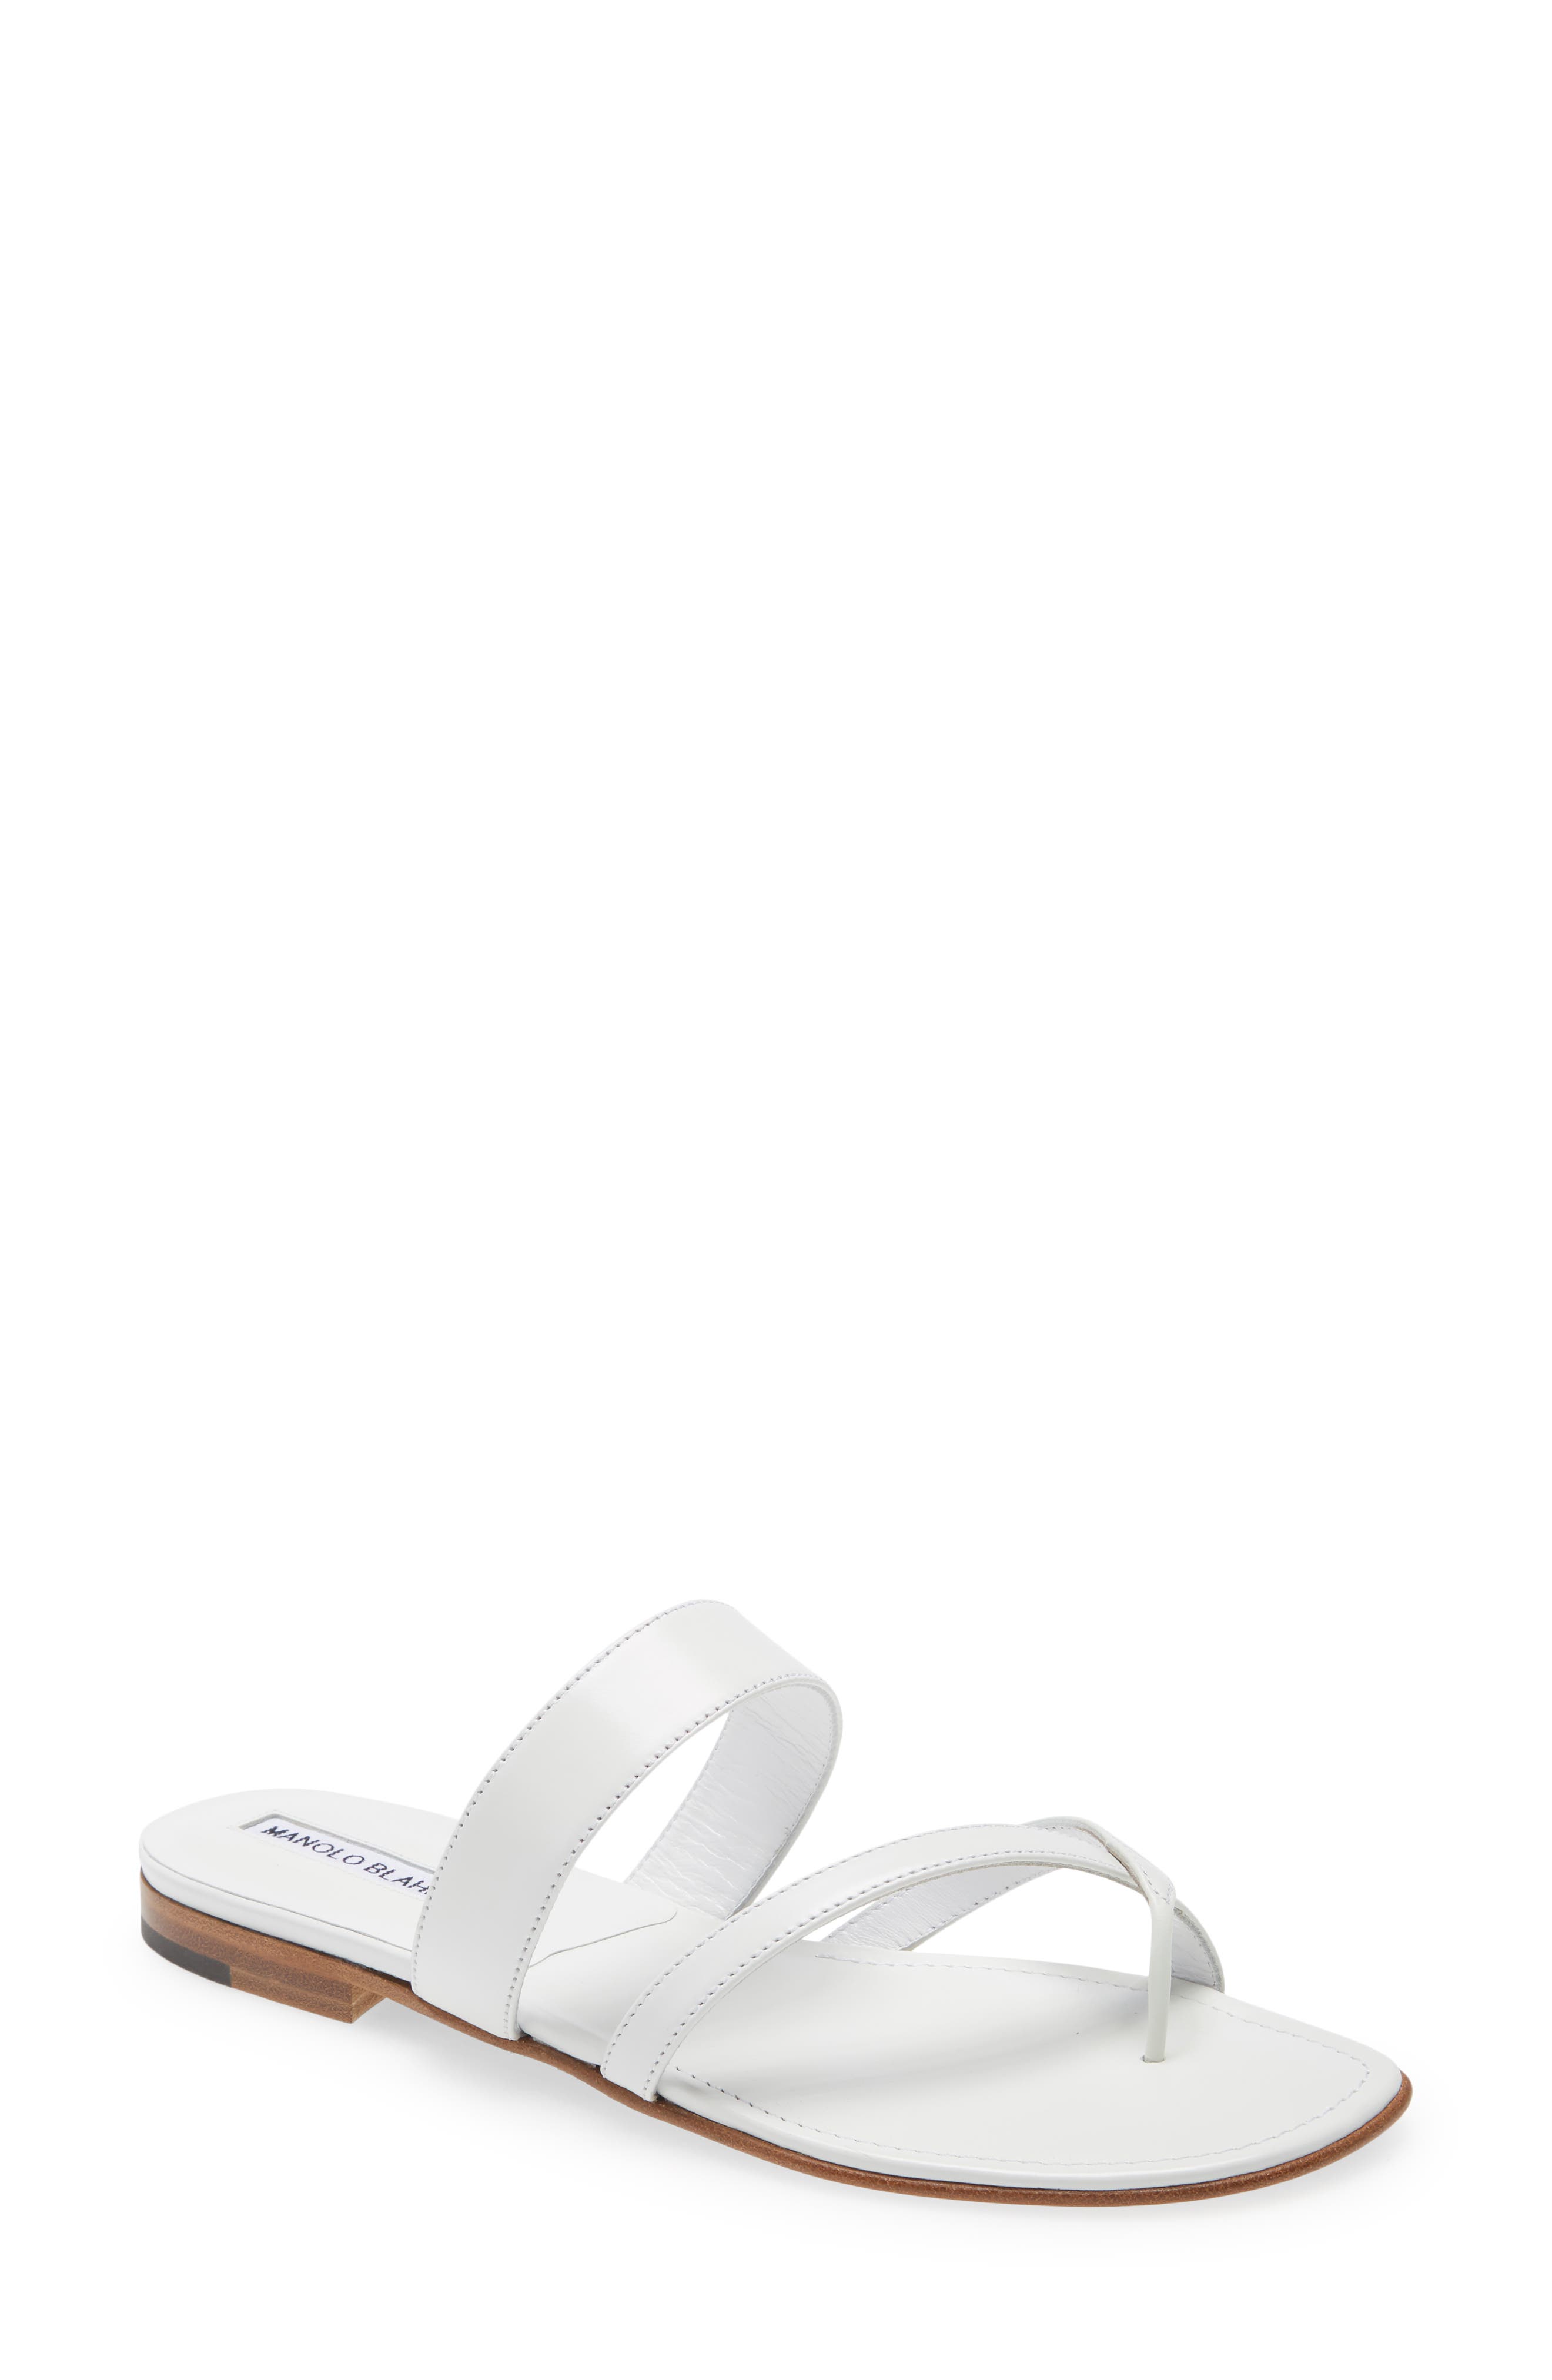 Manolo Blahnik Susa Toe Loop Sandal in White at Nordstrom, Size 5.5Us